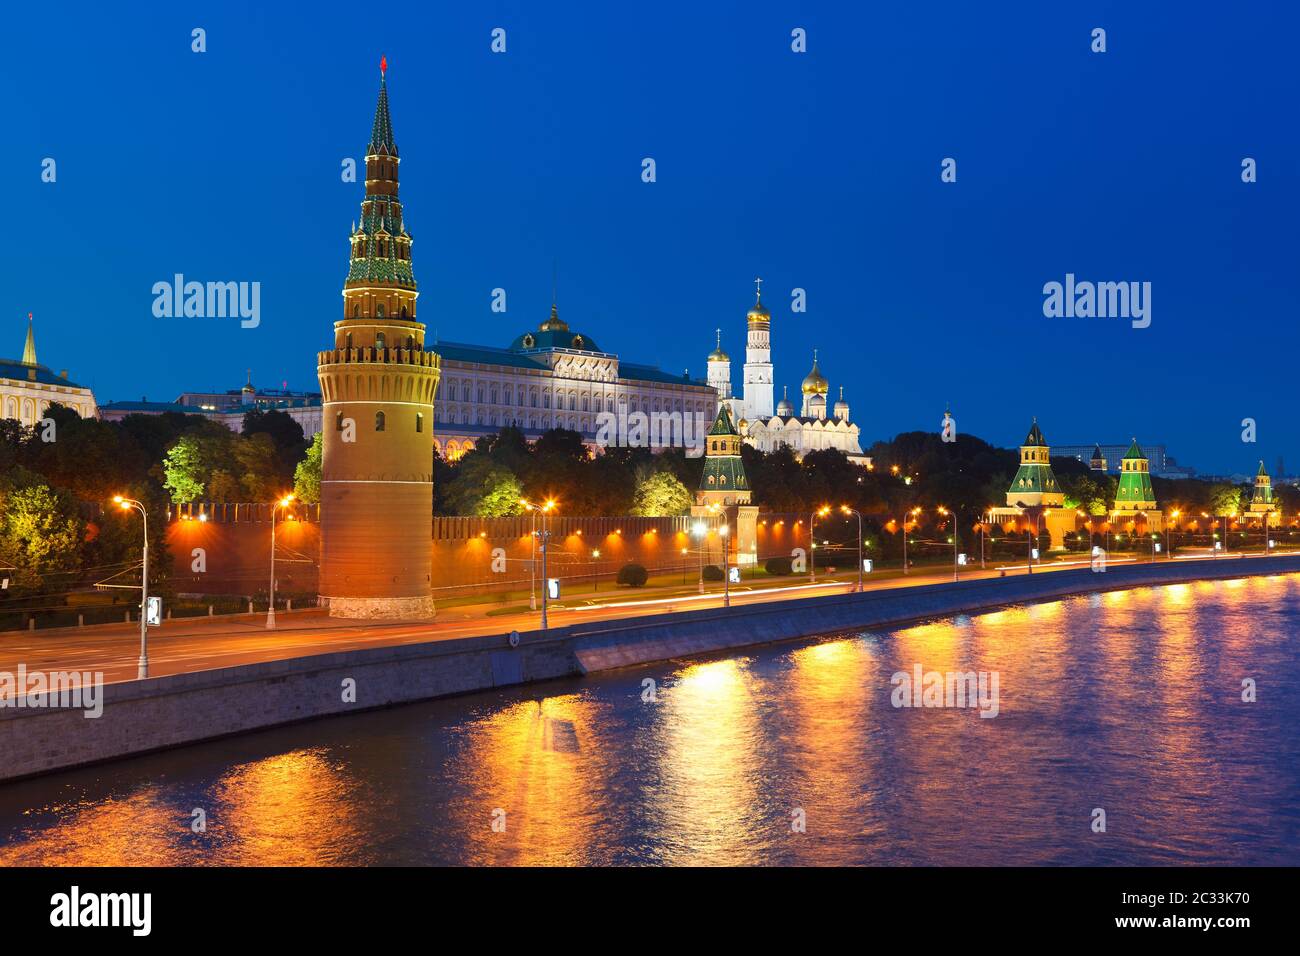 Moscow kremlin at night Stock Photo